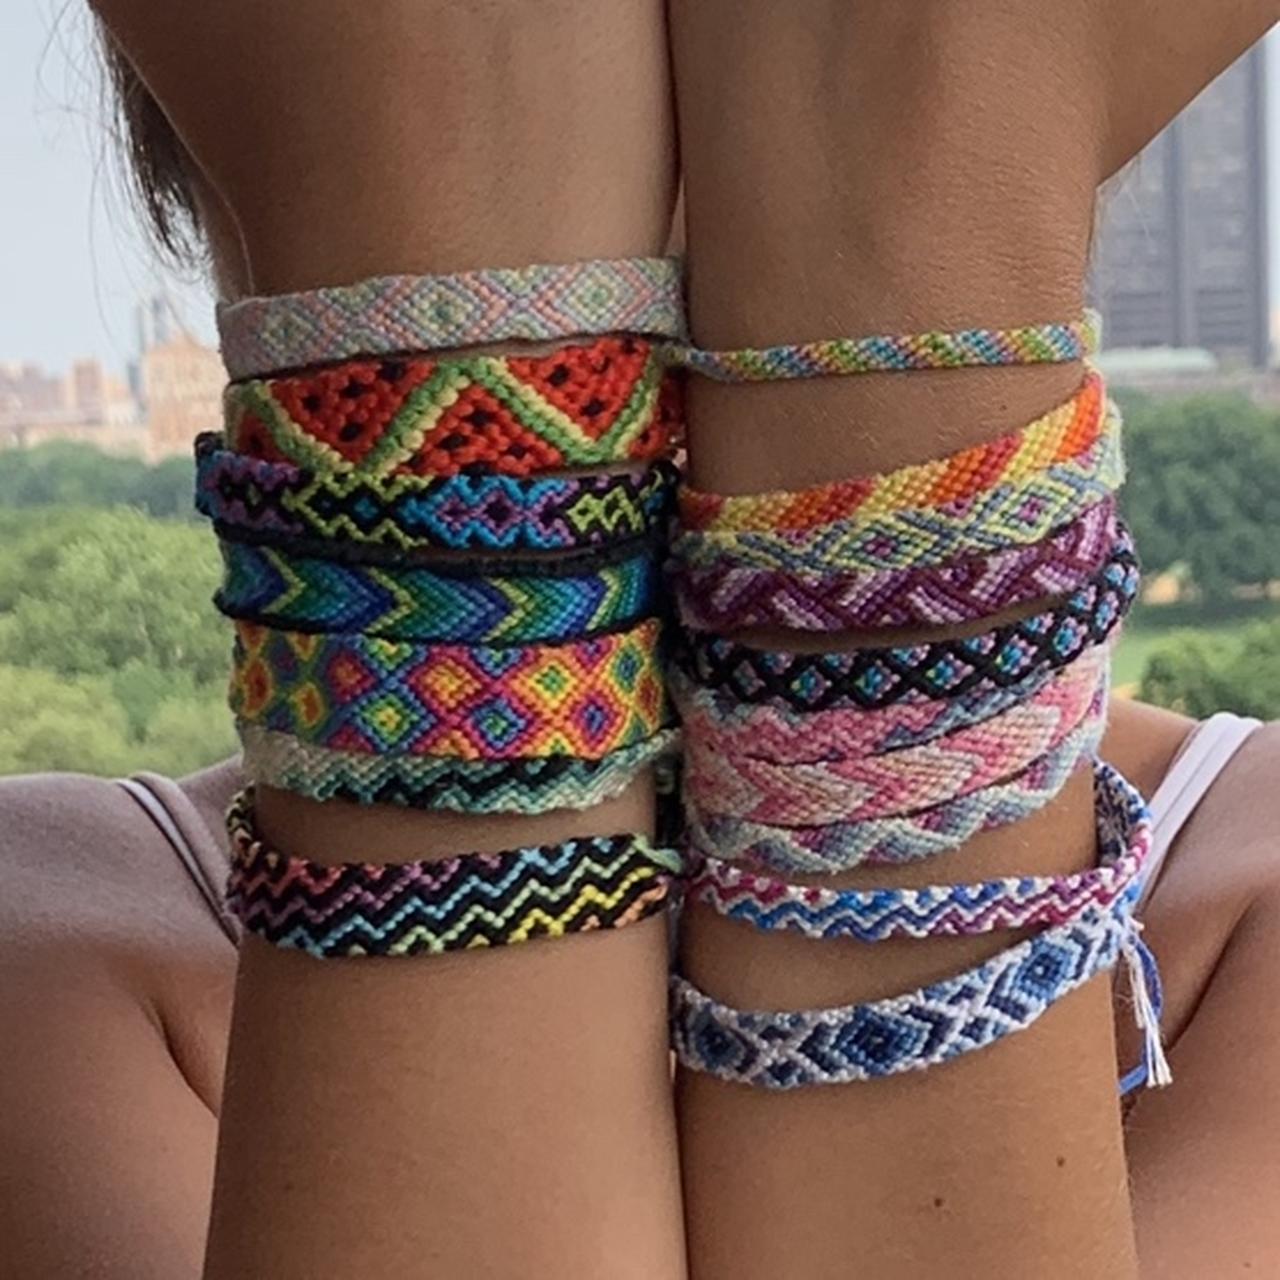 handmade friendship bracelets